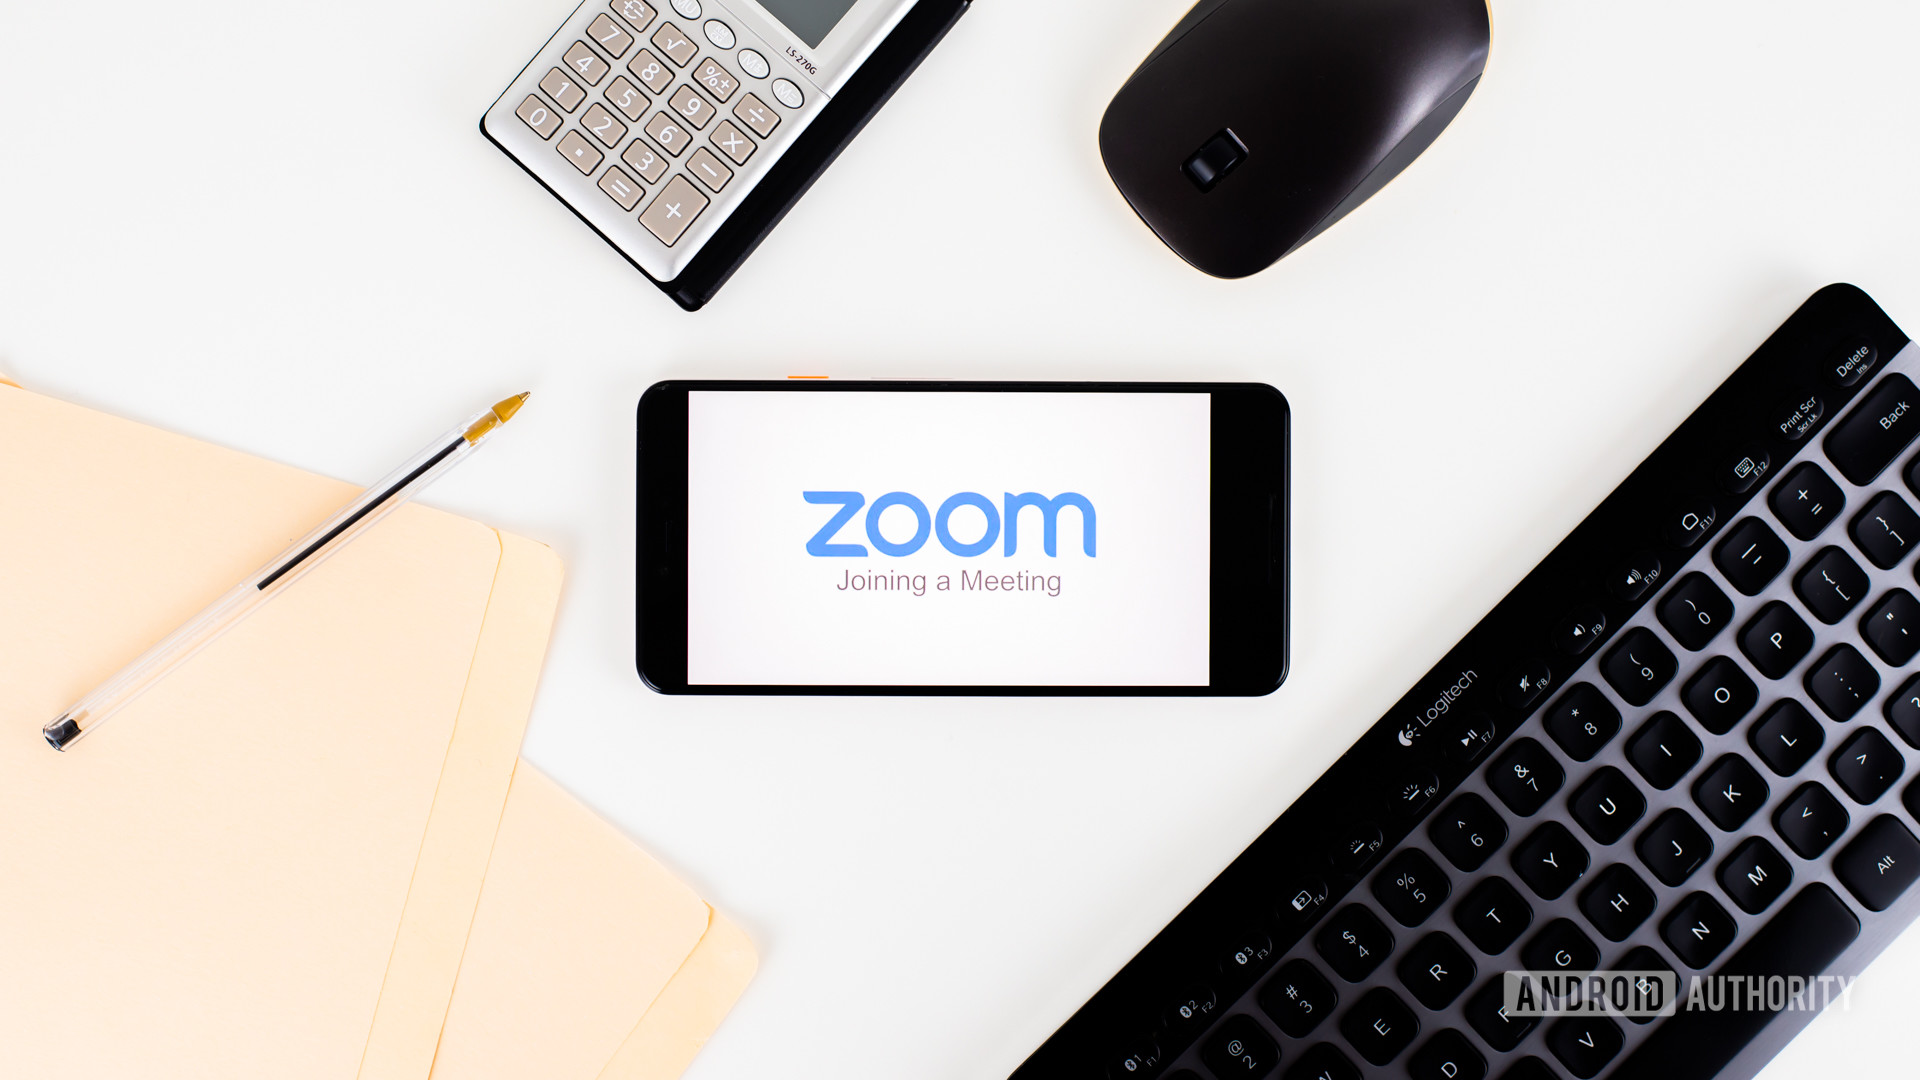 Zoom Meetings on smartphone next to office equipment stock 1 - Zoom vs Skype